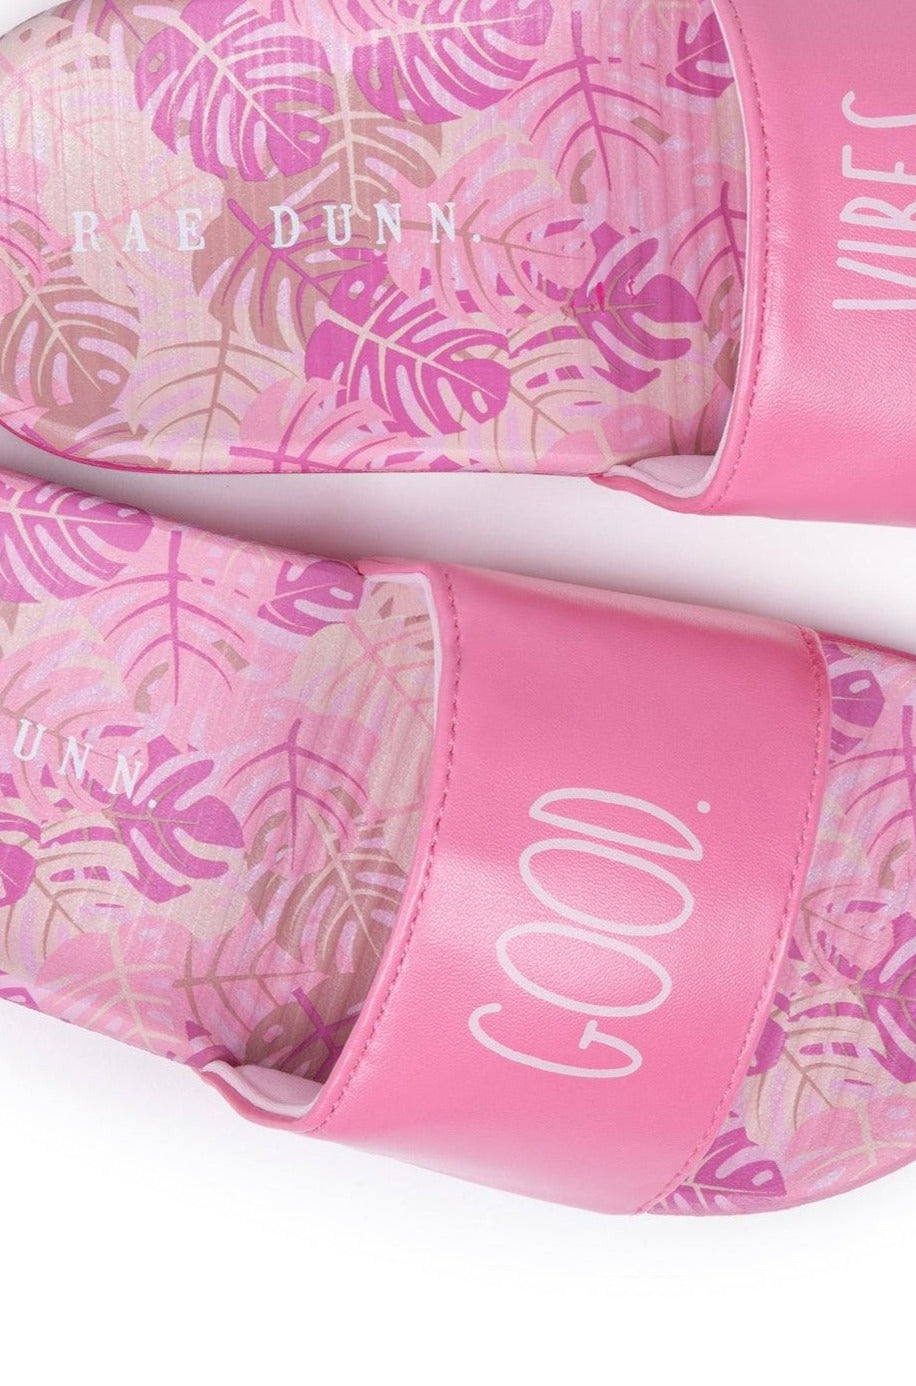 Girl's "GOOD VIBES" Pink Pool Slides - Rae Dunn Wear - G Footwear